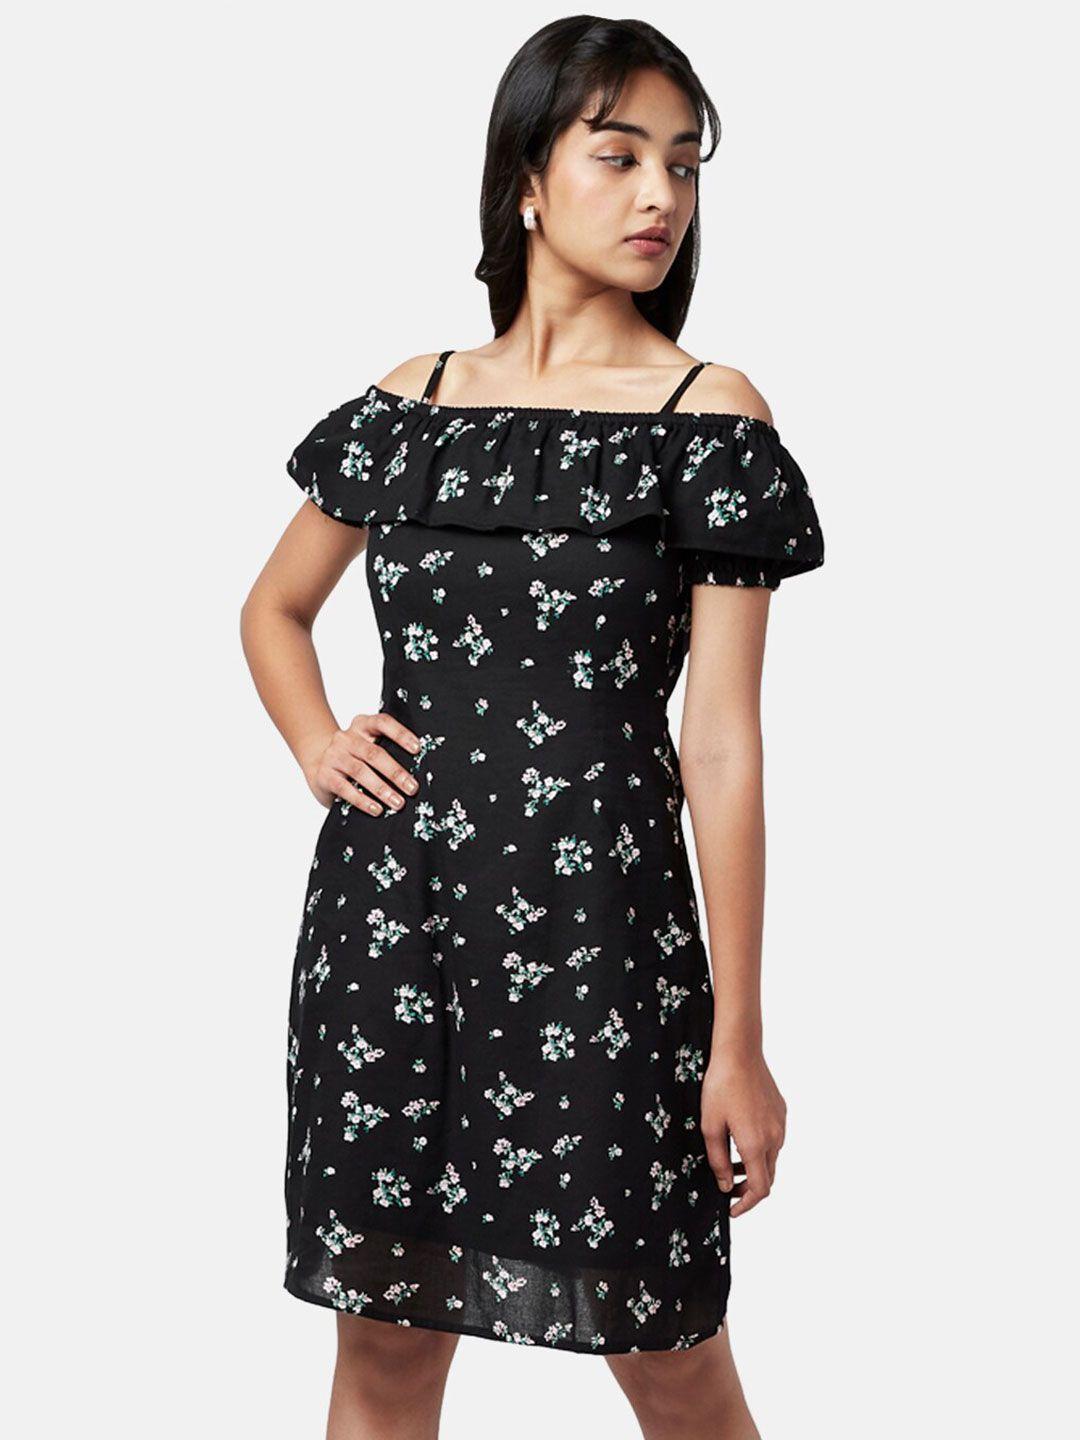 yu by pantaloons black floral dress